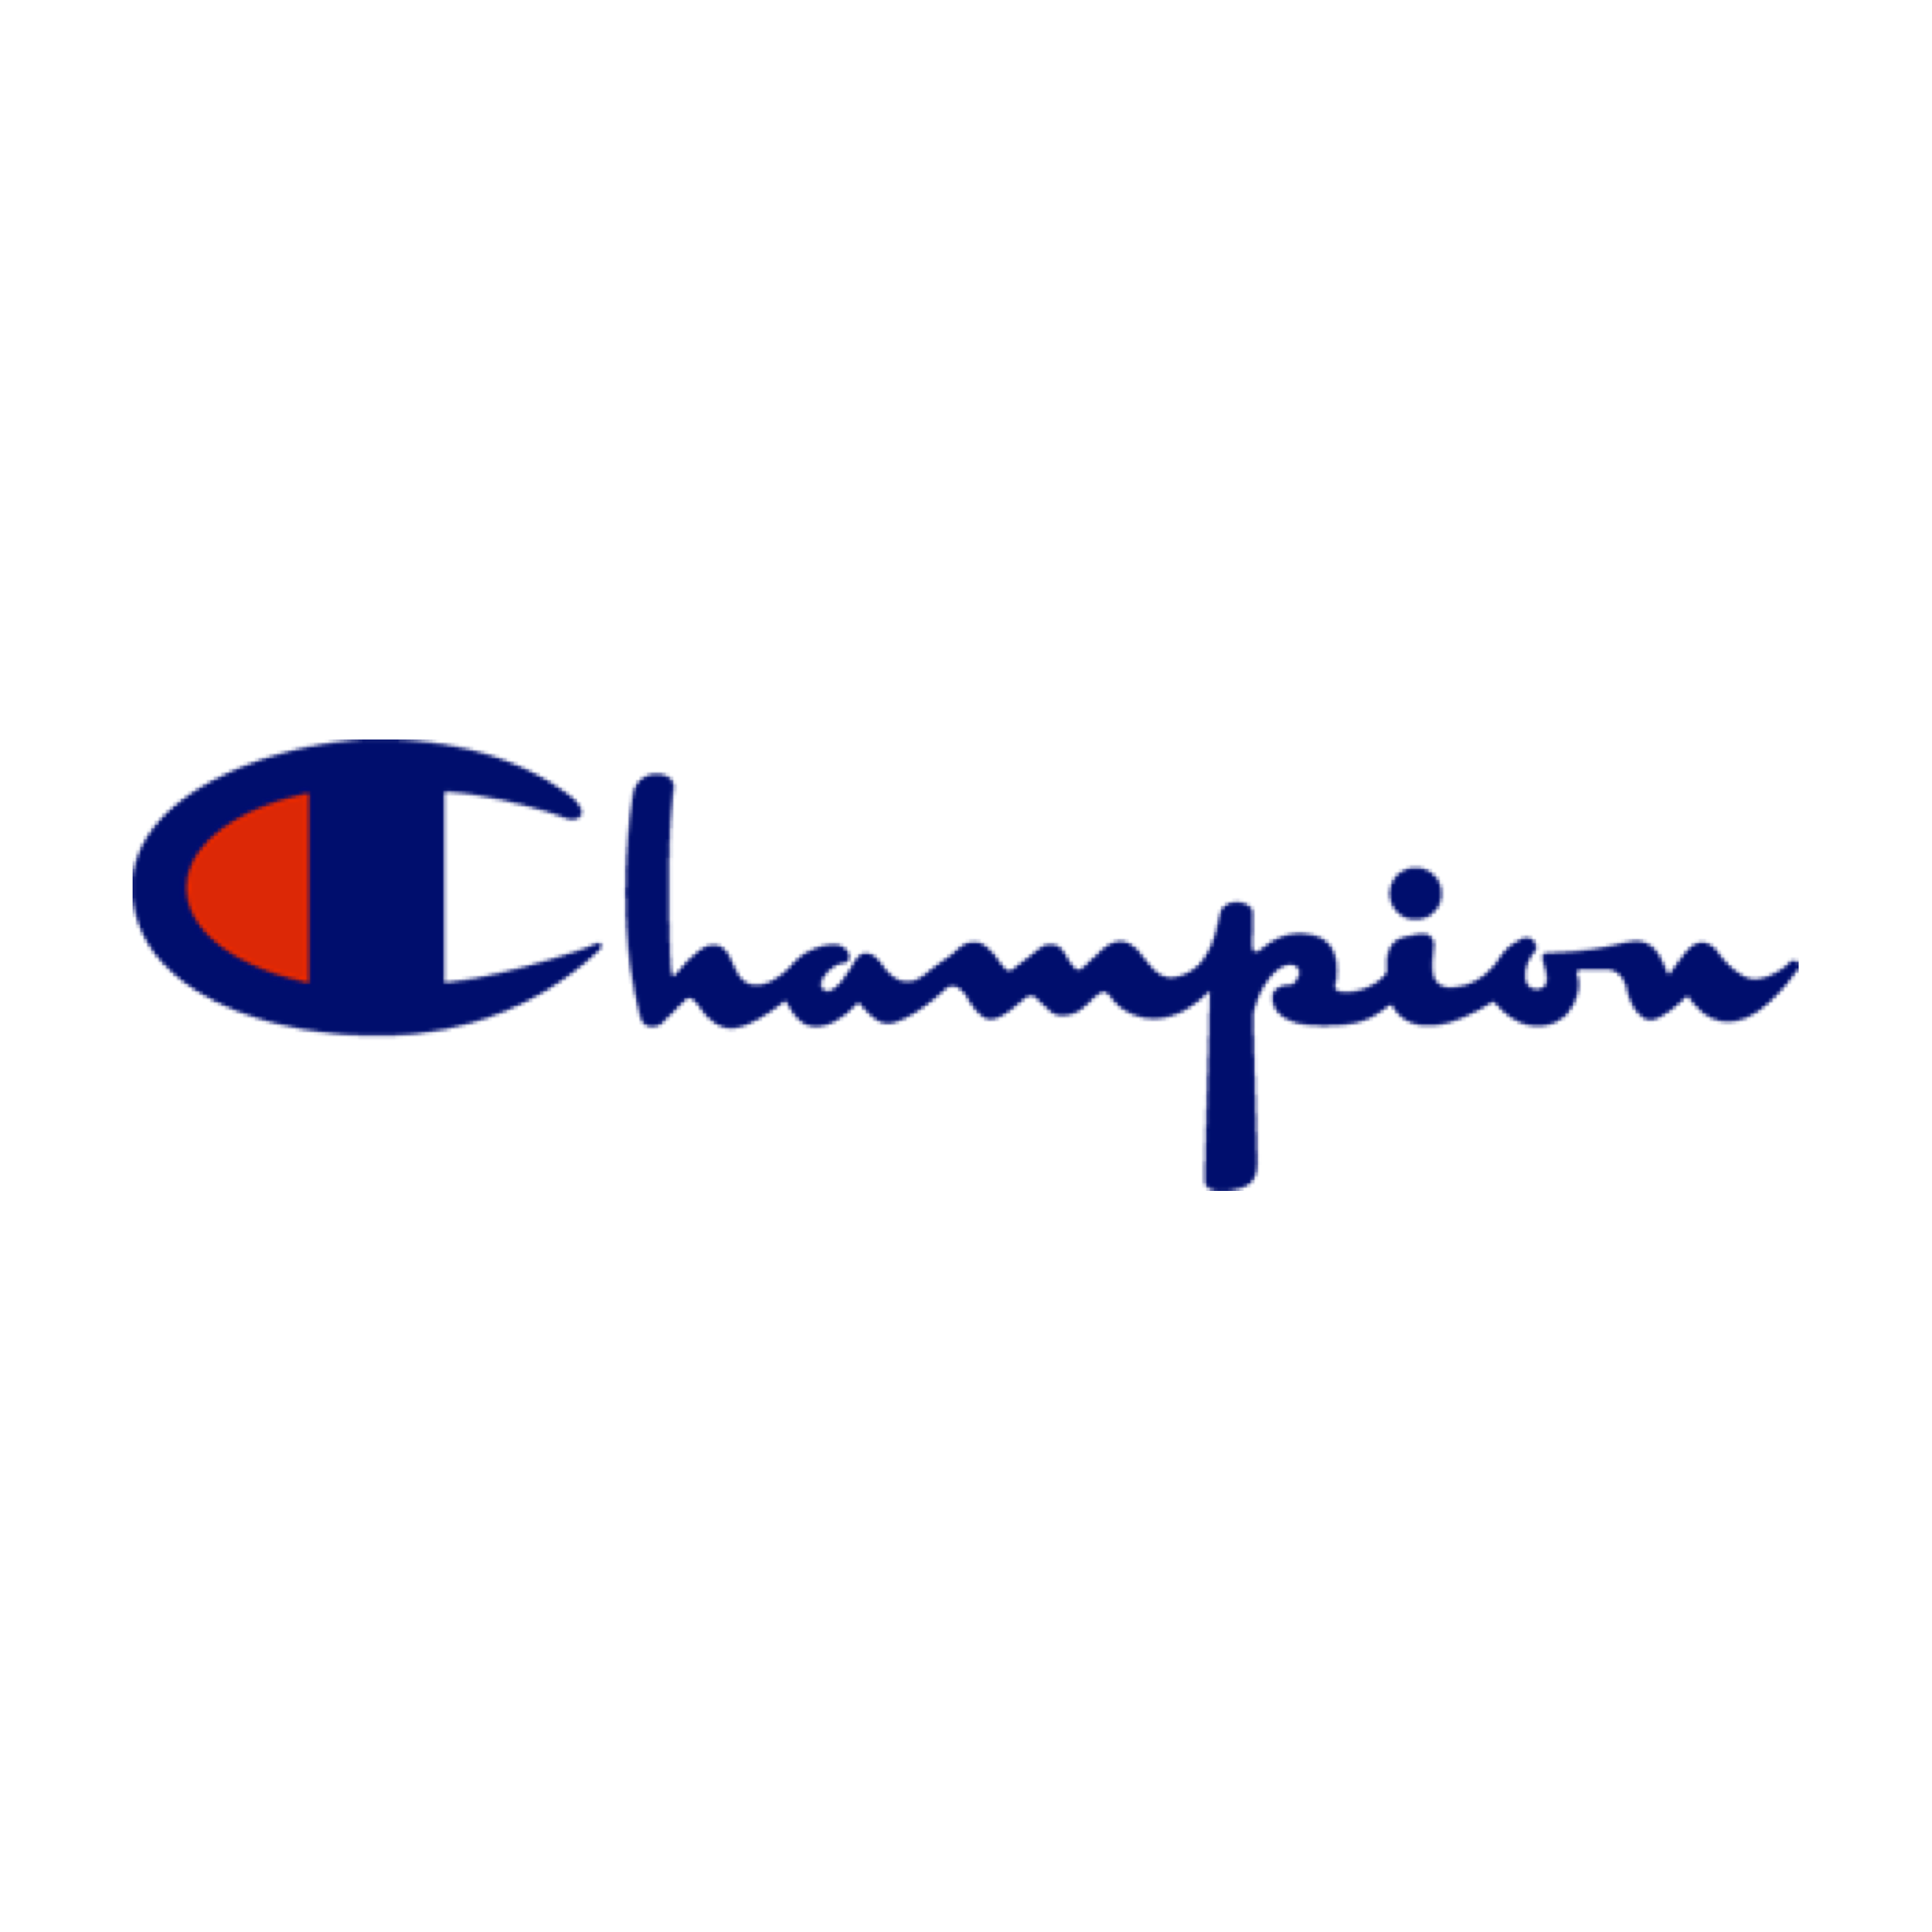 Champion Apparel Logo - Champion. BRANDS. Champion logo, Champion, Logos